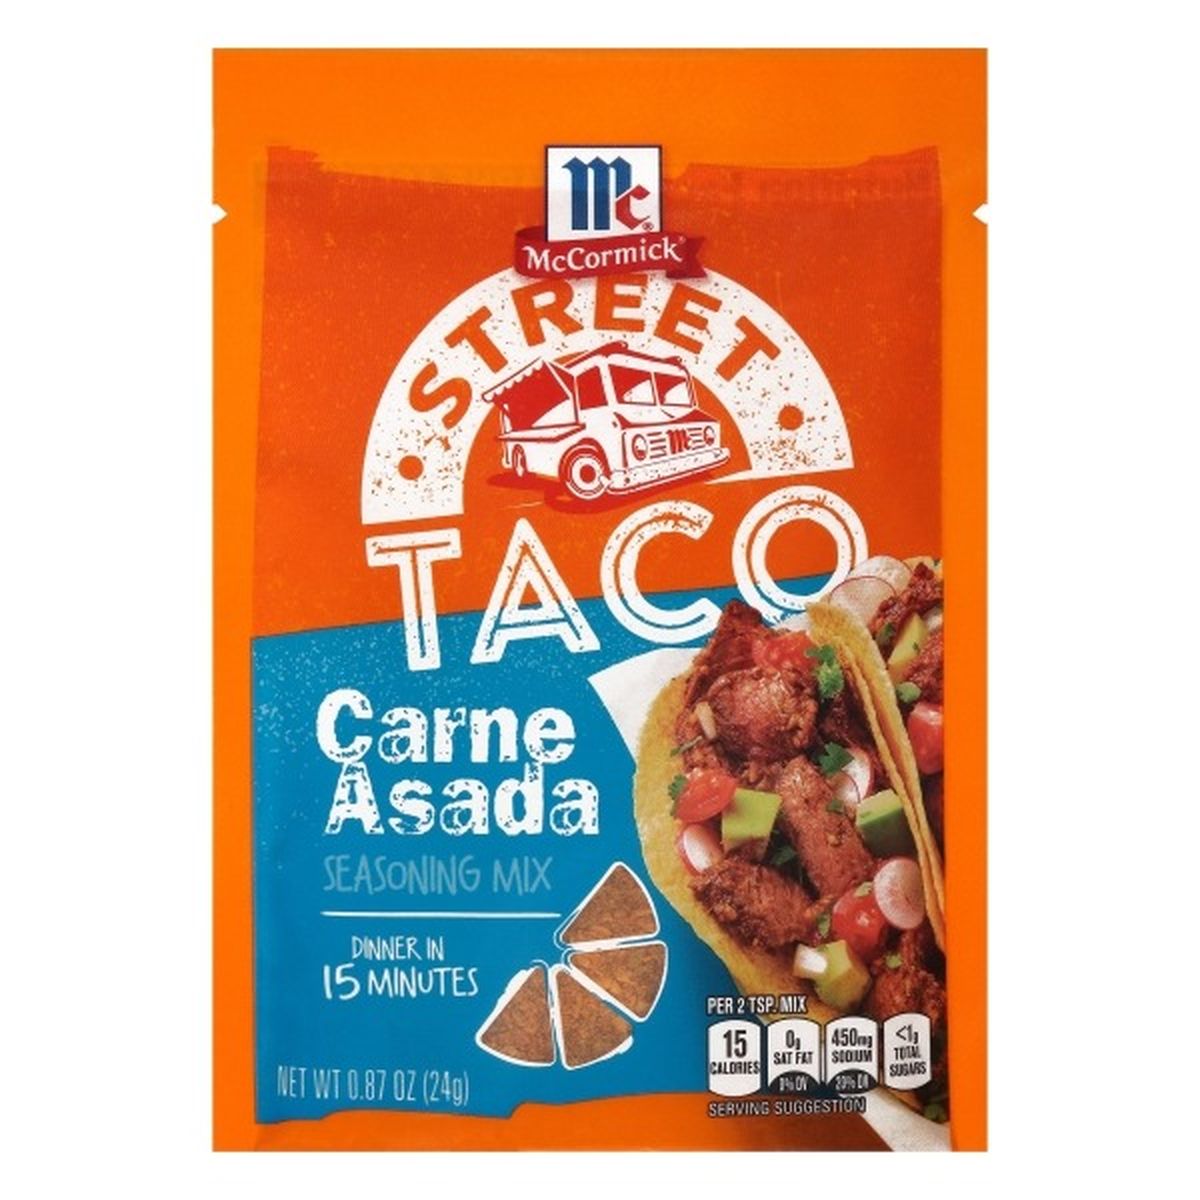 Calories in McCormicks  Street Taco Seasoning Mix, Carne Asada